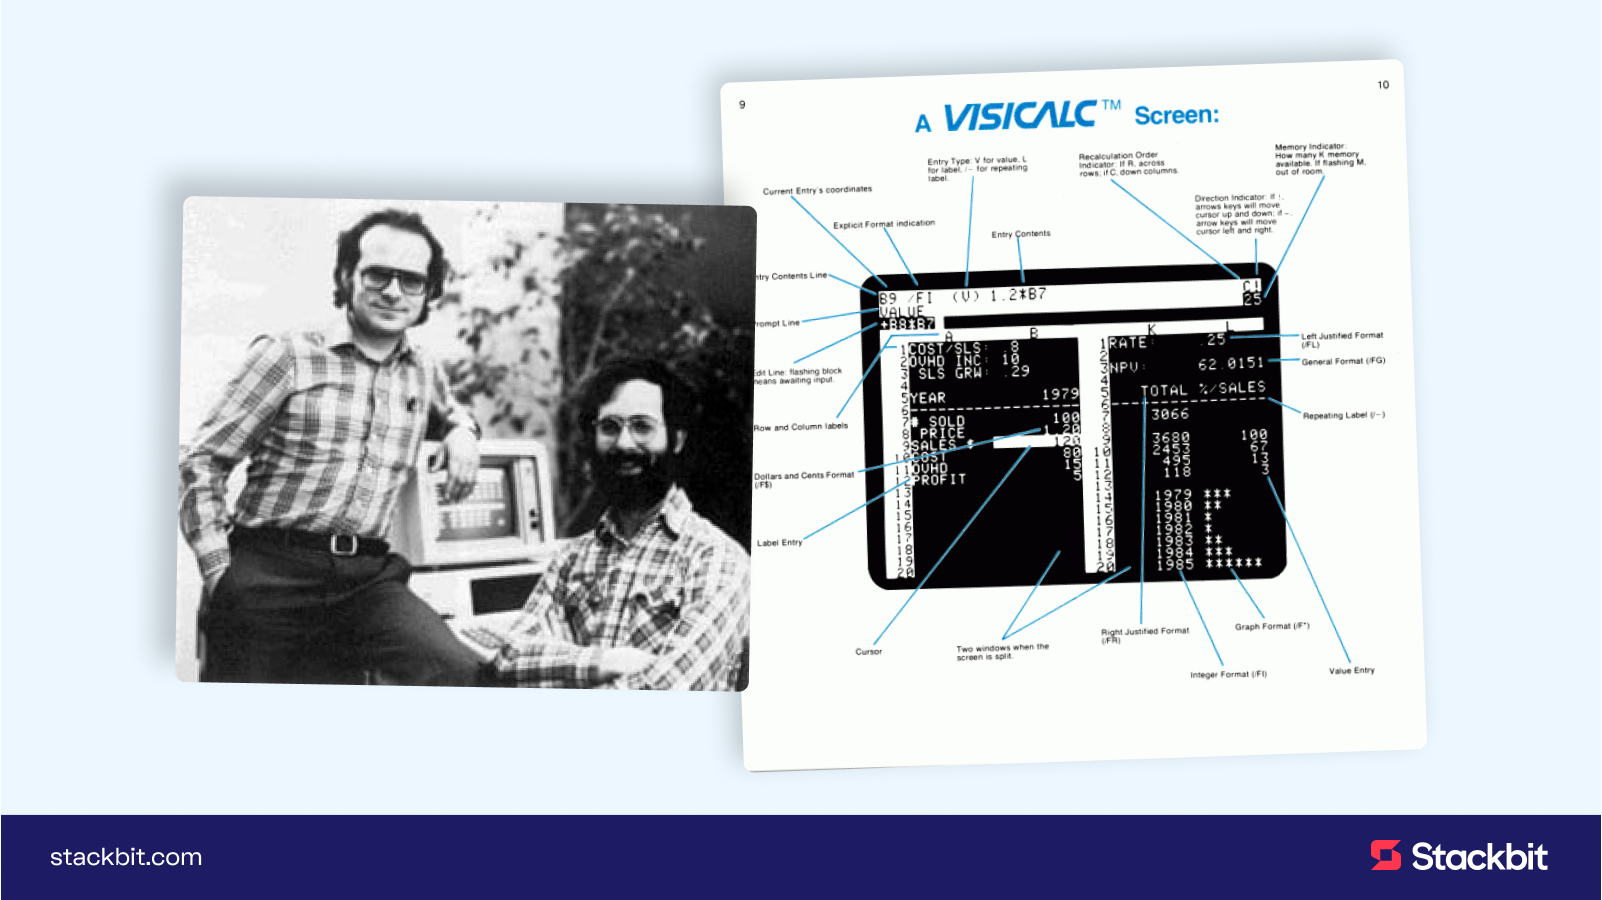 Dan Bricklin and Bob Frankston of VisiCalc